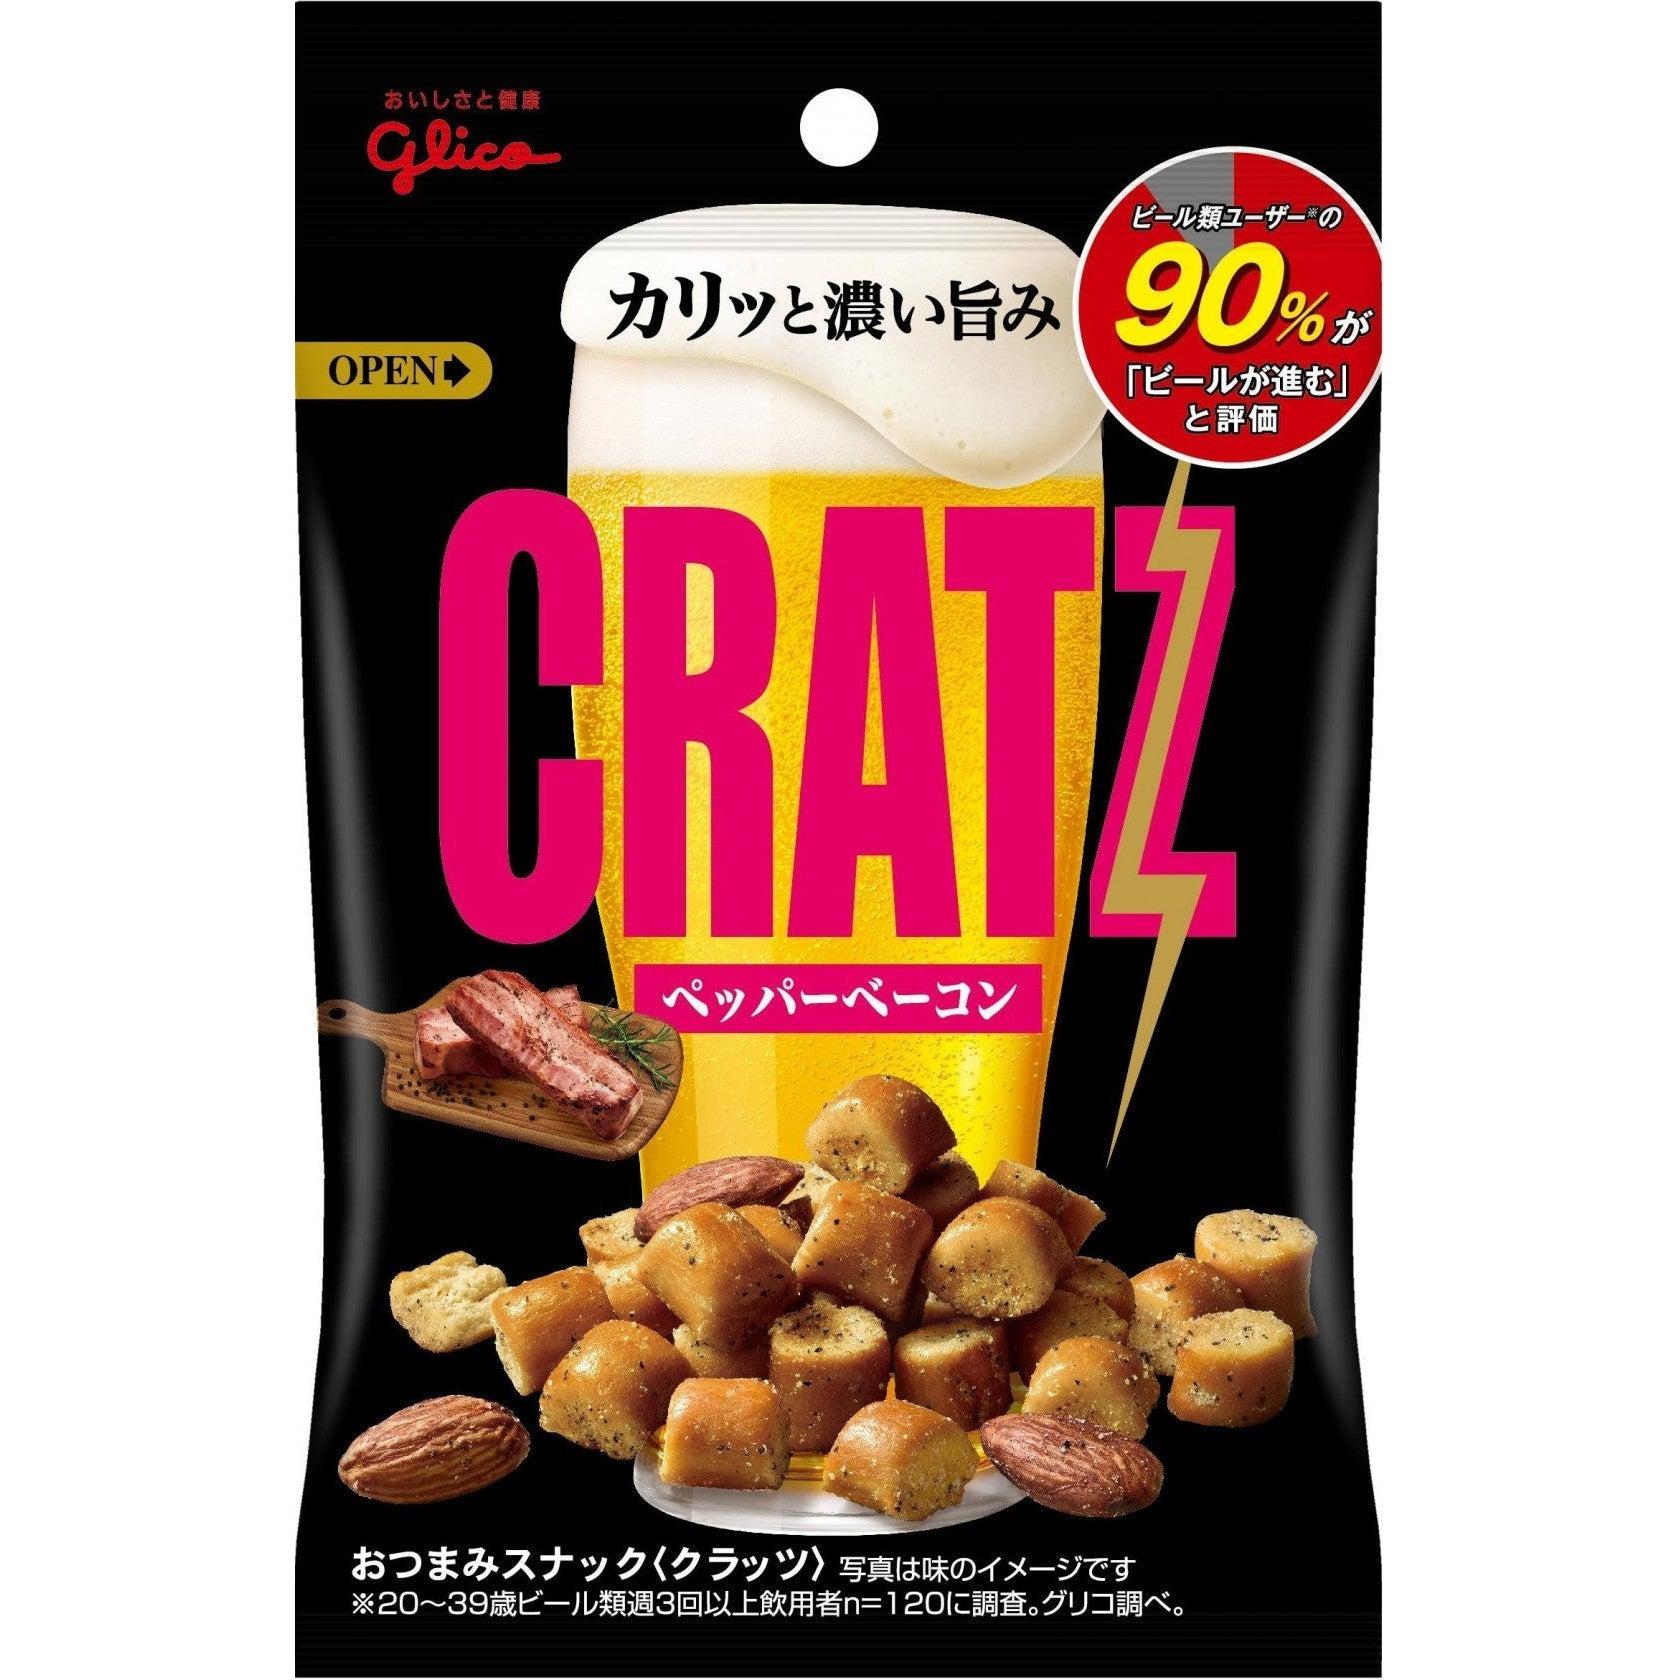 Glico Cratz Pepper Bacon Snack (Pack of 10)